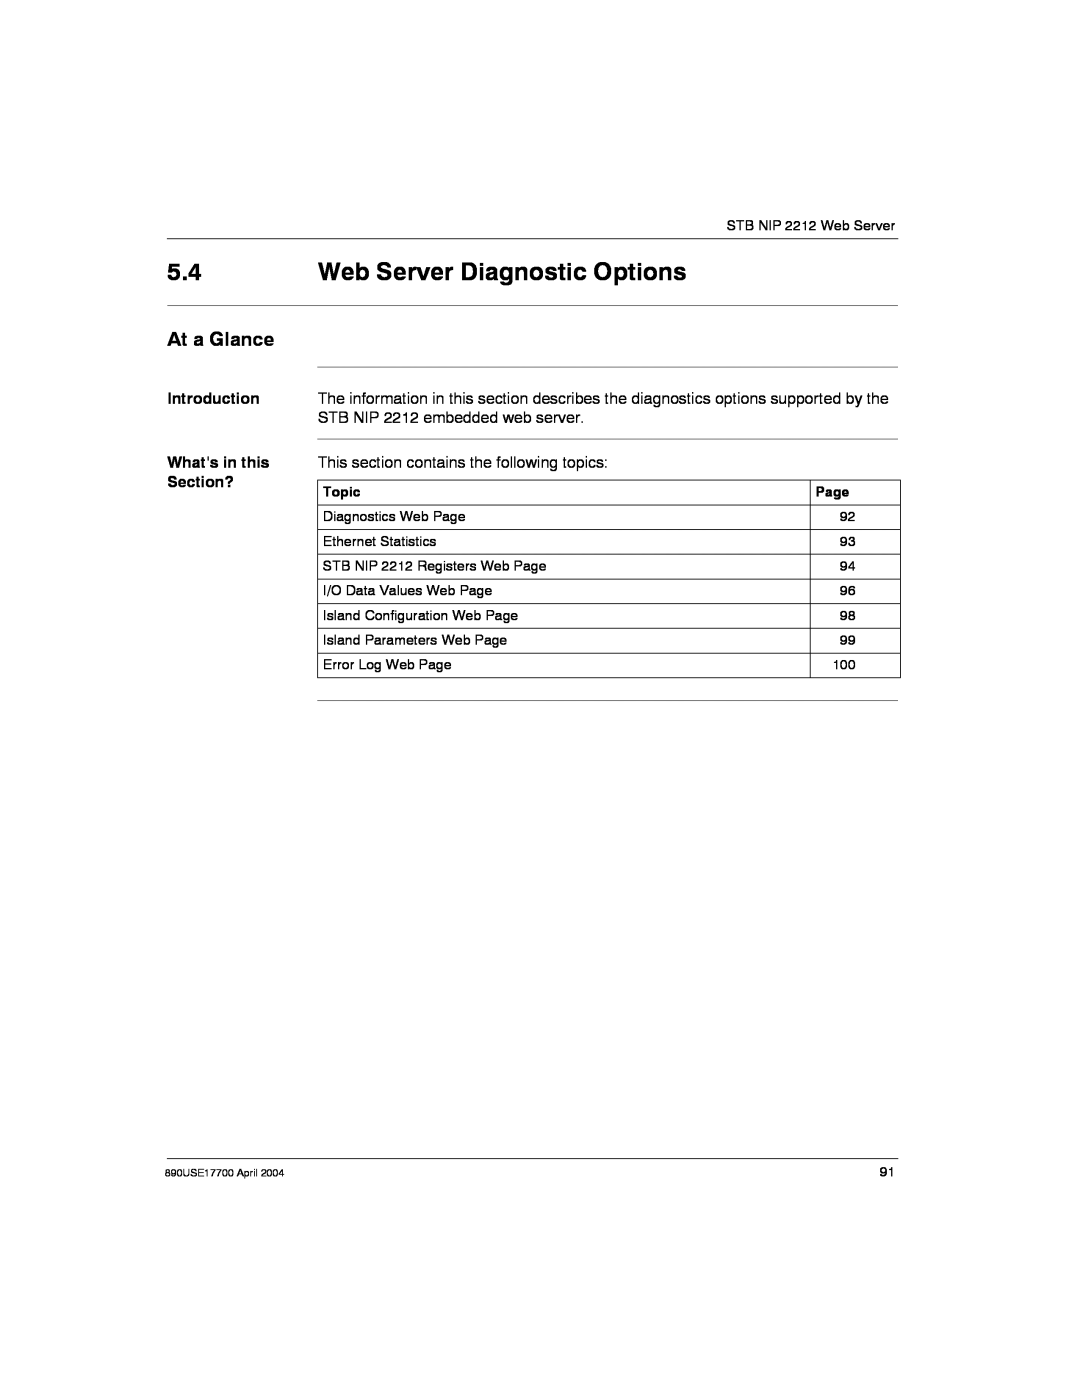 Schneider Electric manual Web Server Diagnostic Options, At a Glance, 890USE17700 April 